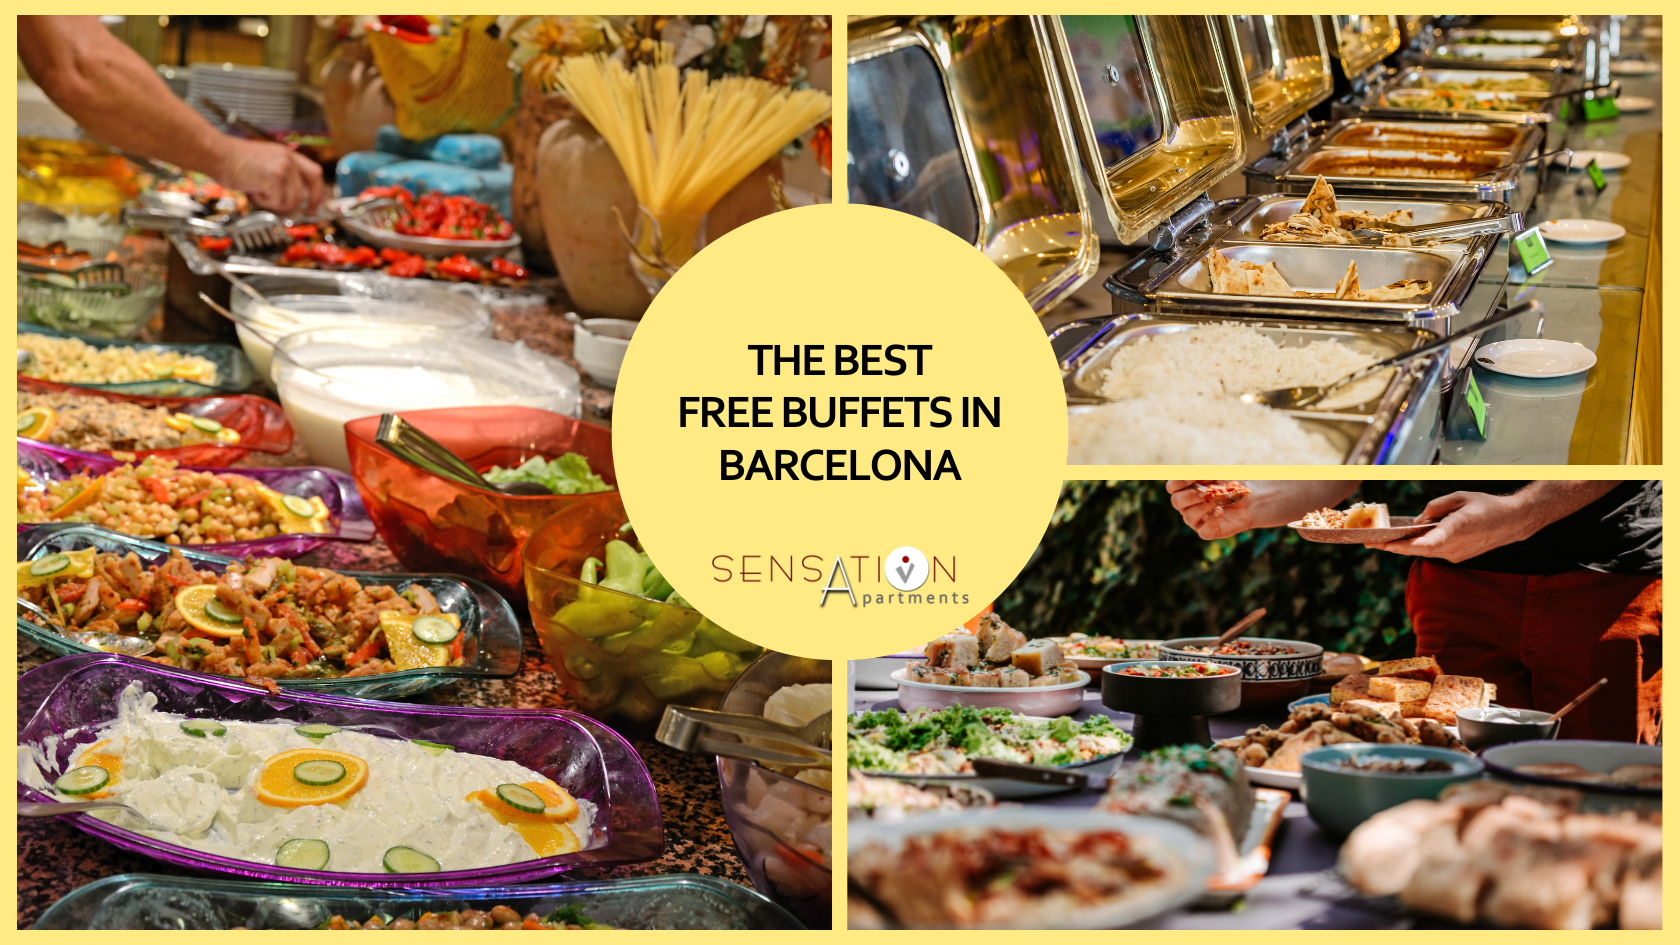 The best free buffets in Barcelona